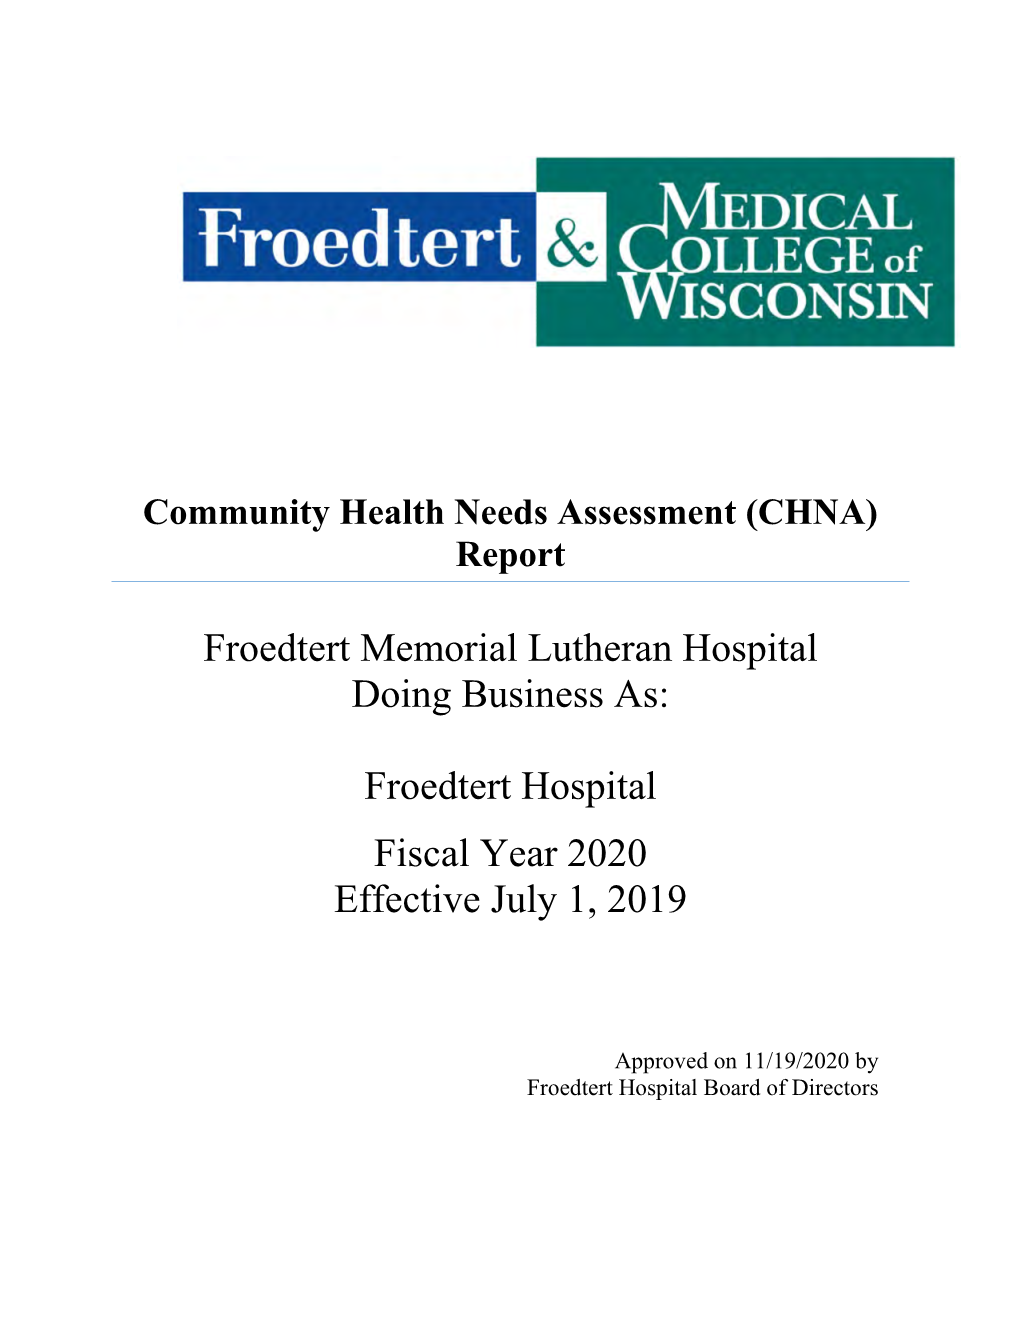 Froedtert Hospital Community Health Needs Assessment (CHNA) Report